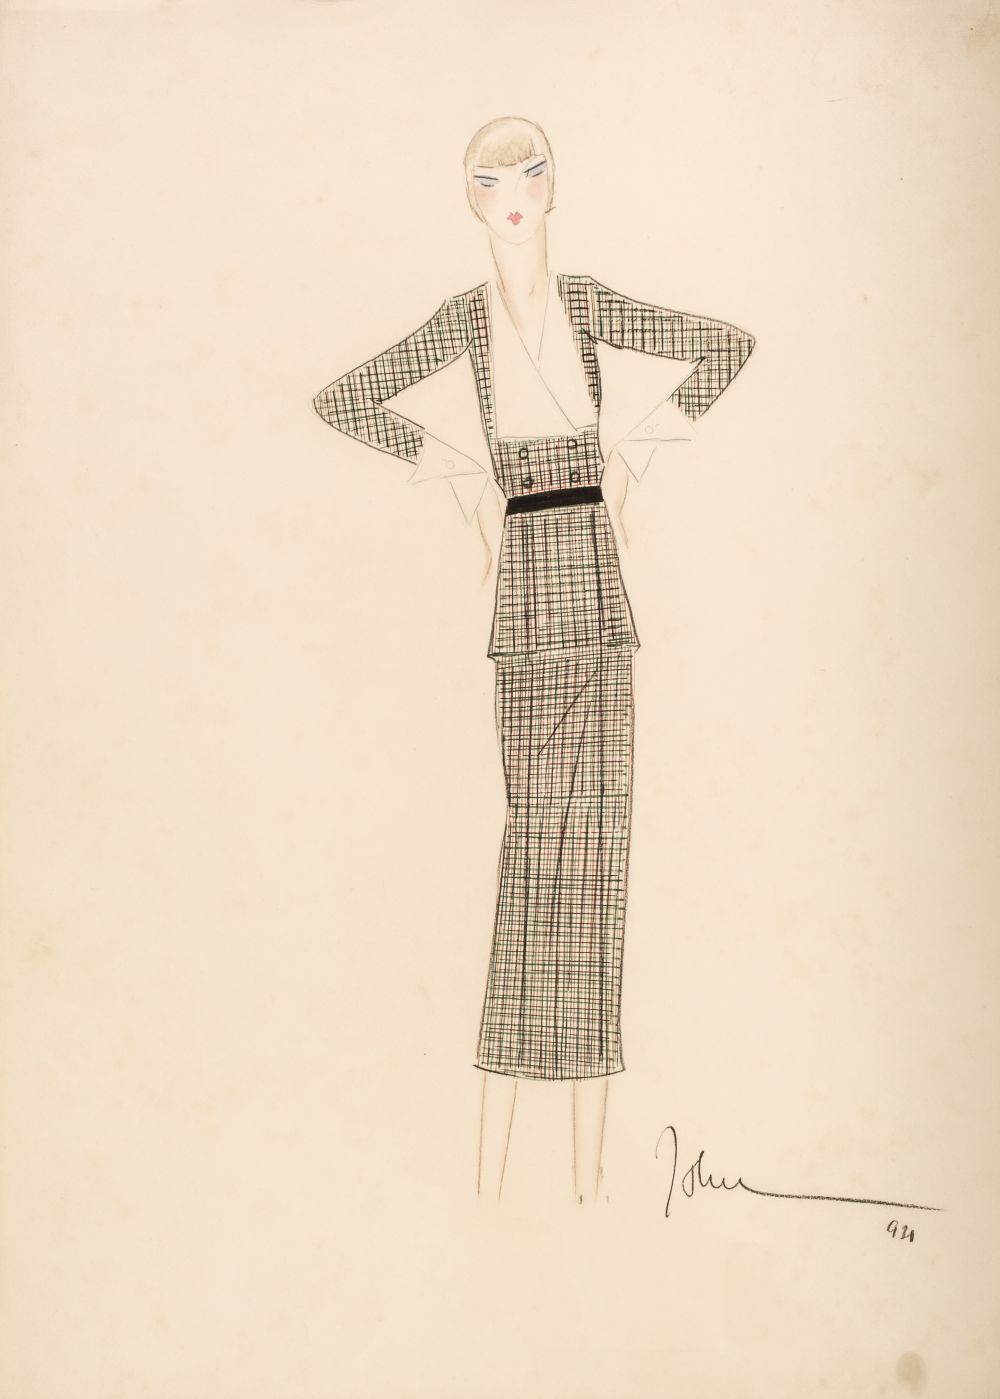 Lot 603 - Guida (John, 1896-1965). Fashion design for